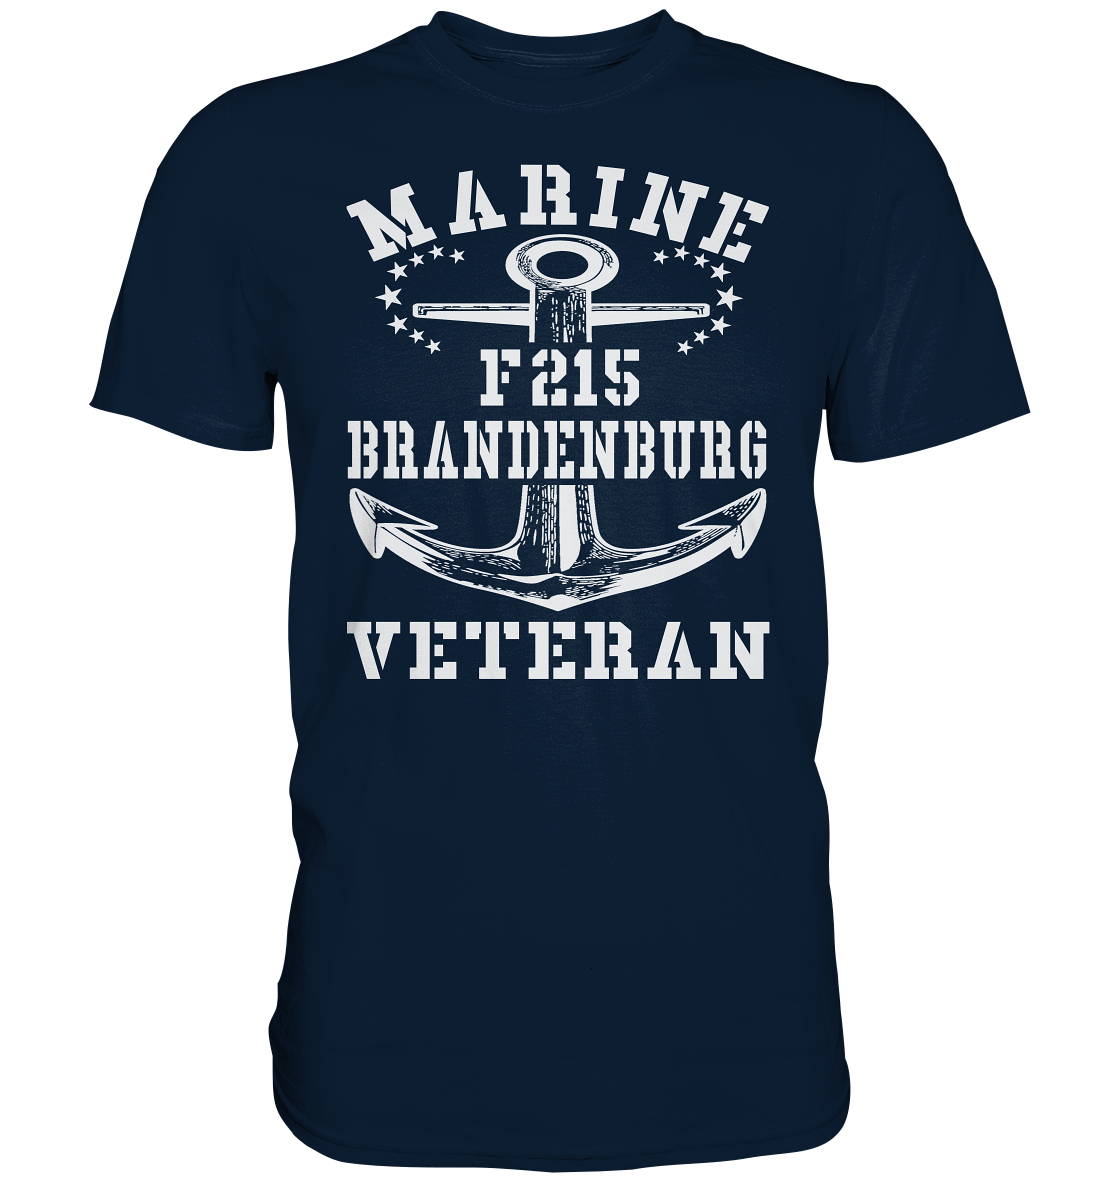 Fregatte F215 BRANDENBURG Marine Veteran - Premium Shirt